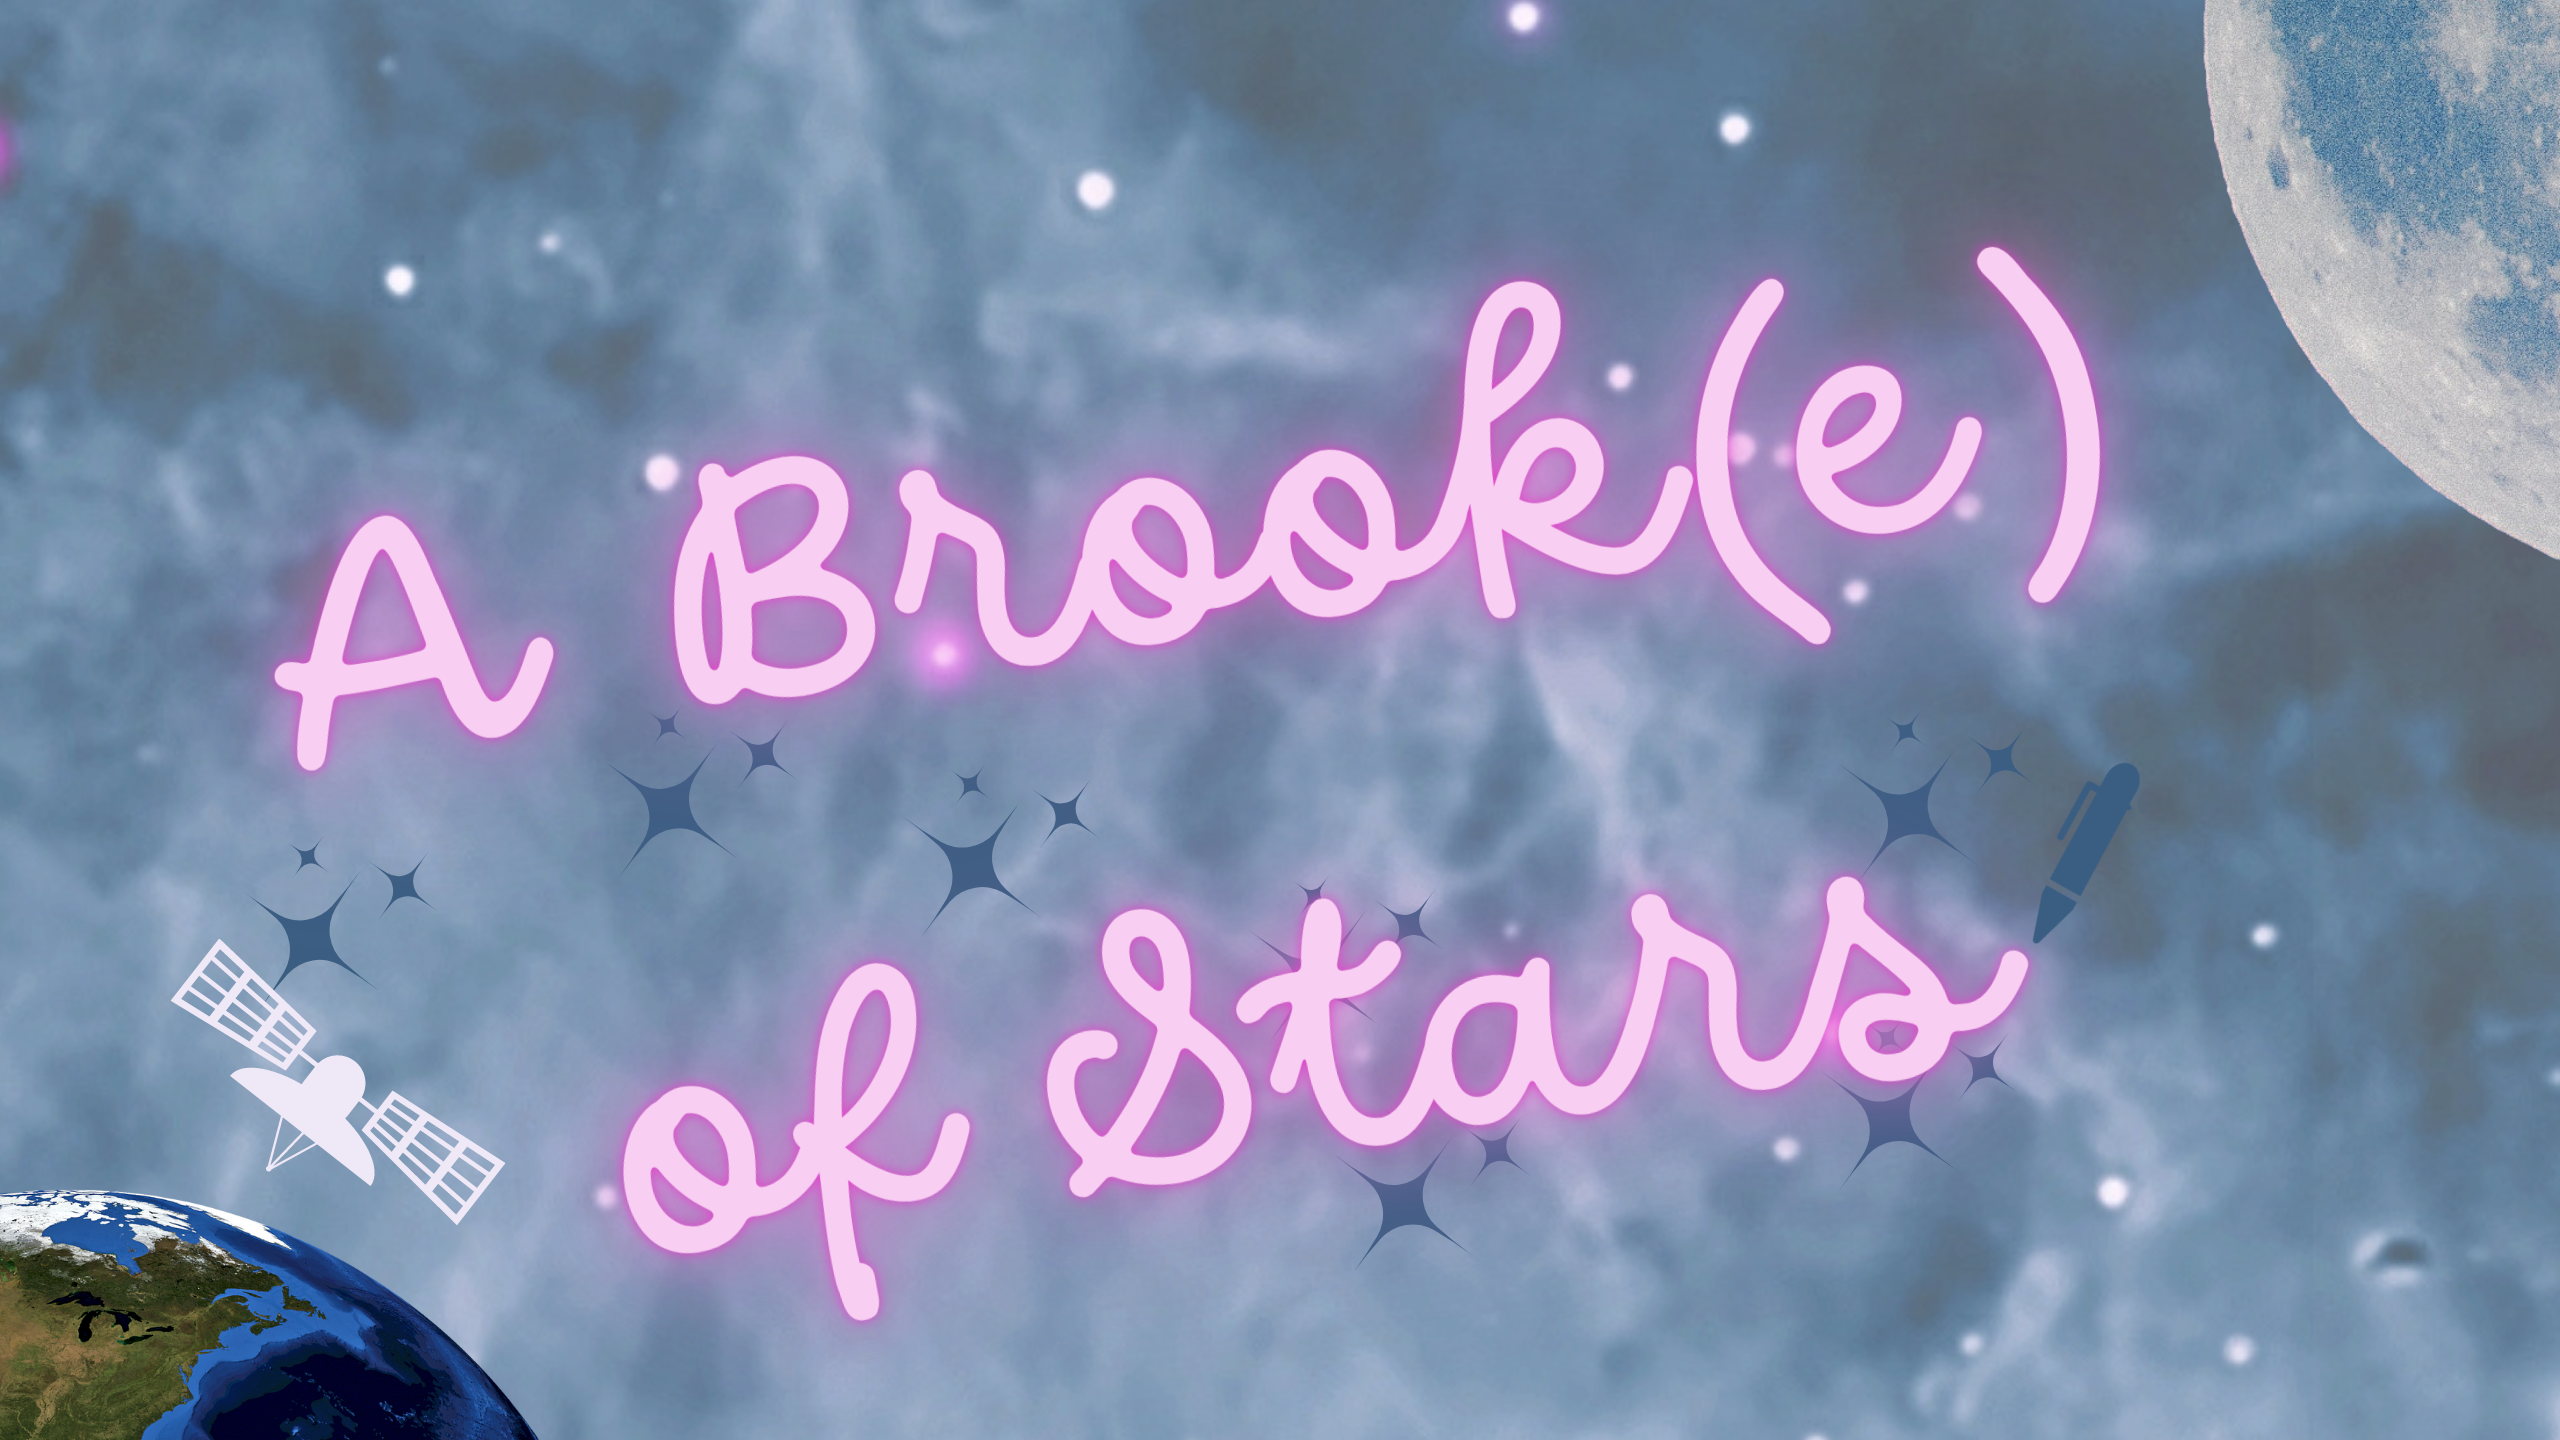 A Brook(e) of Stars